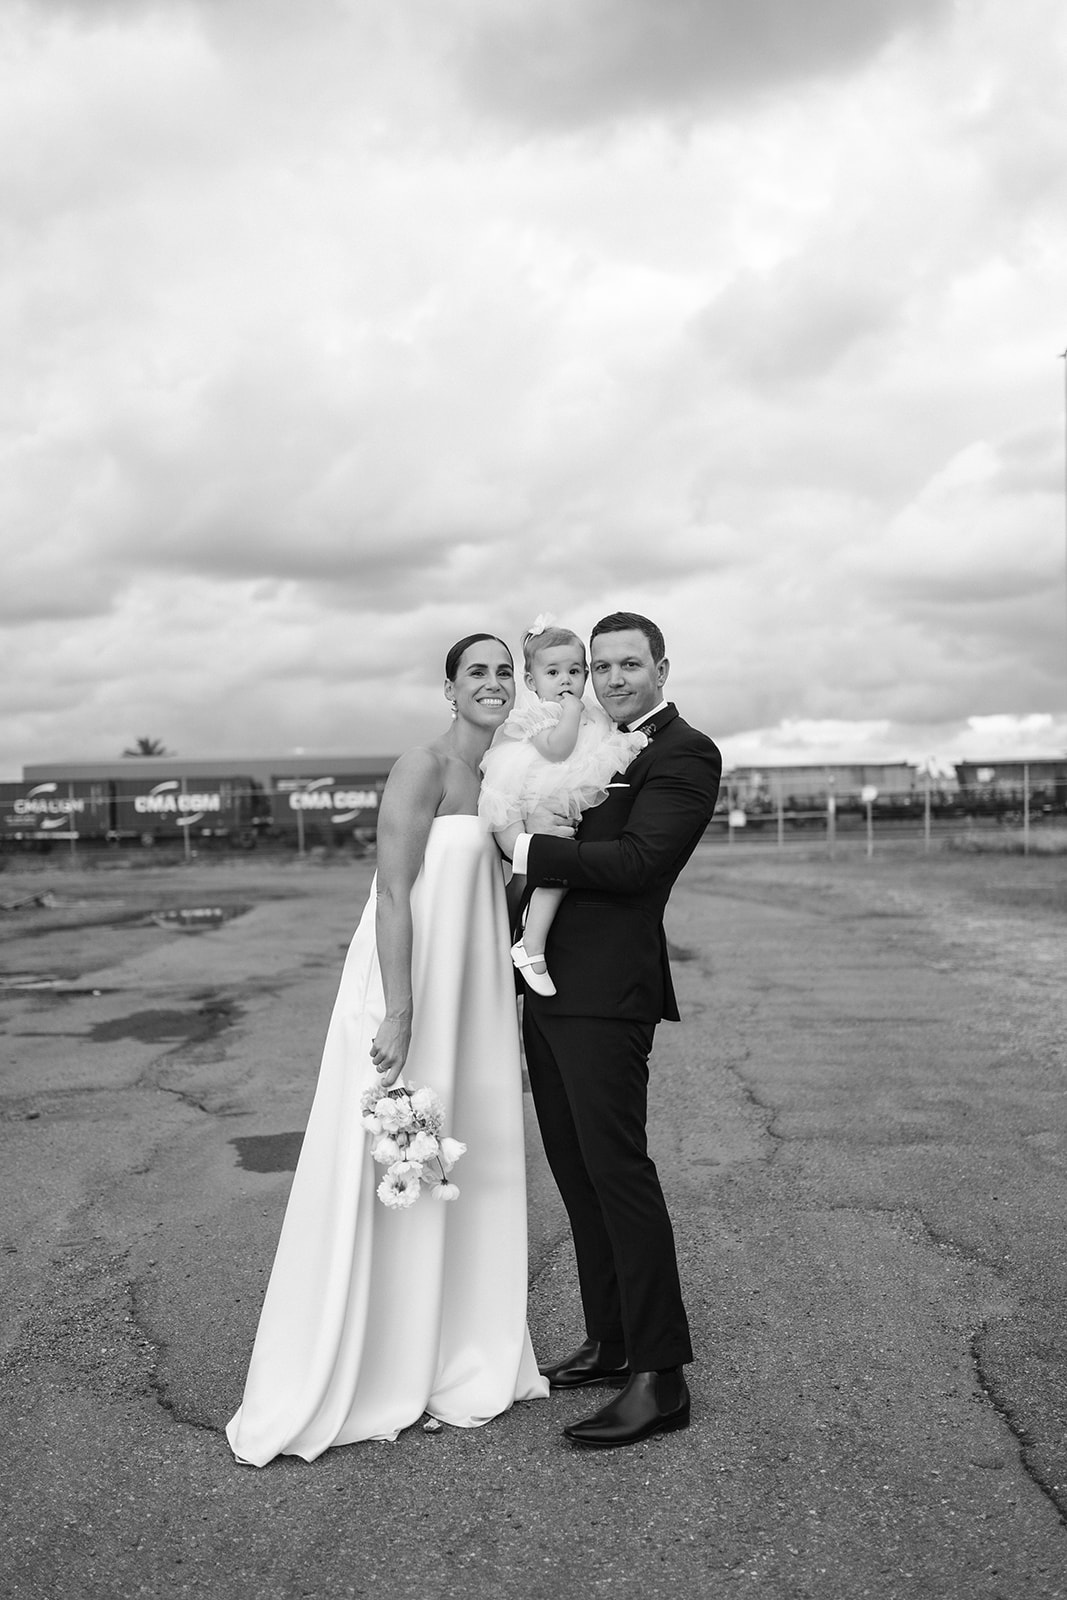 Rebecca + Joel. Real Wedding. Hunter Valley Wedding Planner Magazine. Venue: Earp Distilling Co. Photos by Georgia Burns